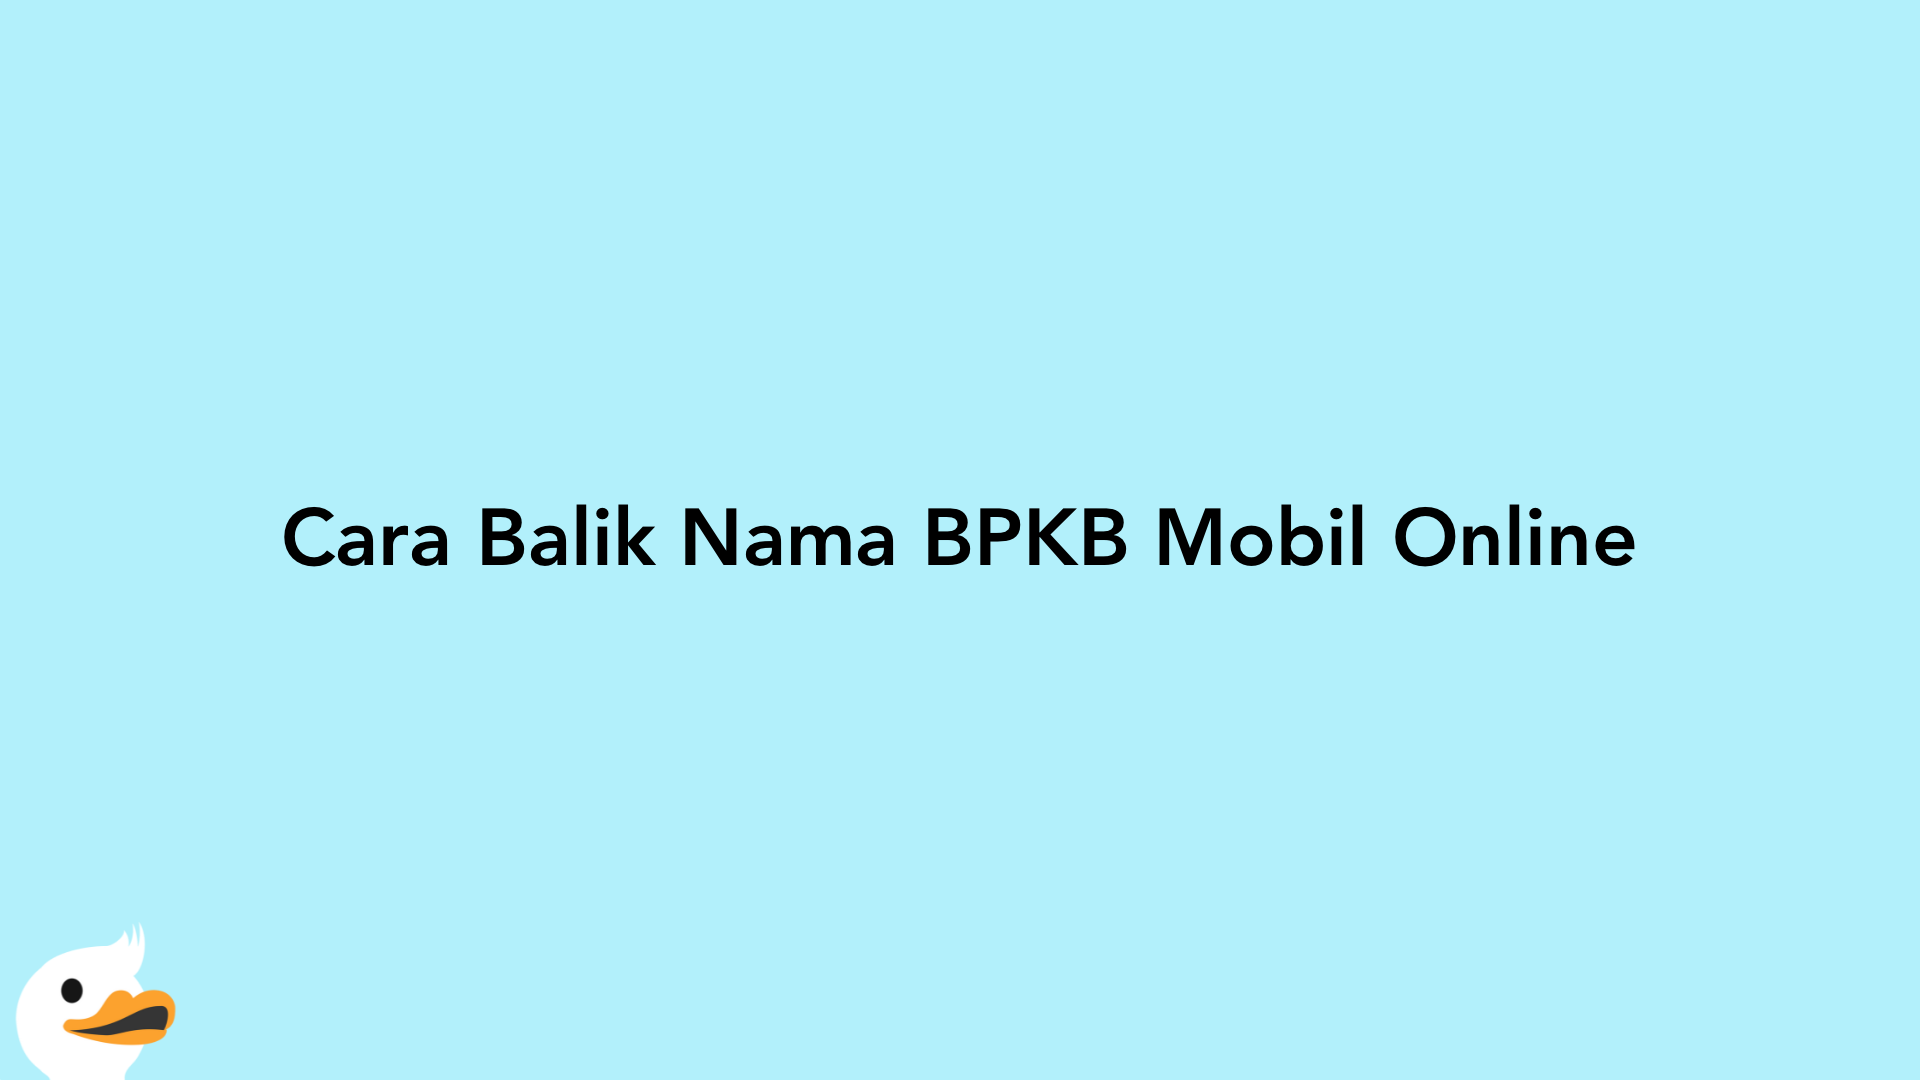 Cara Balik Nama BPKB Mobil Online